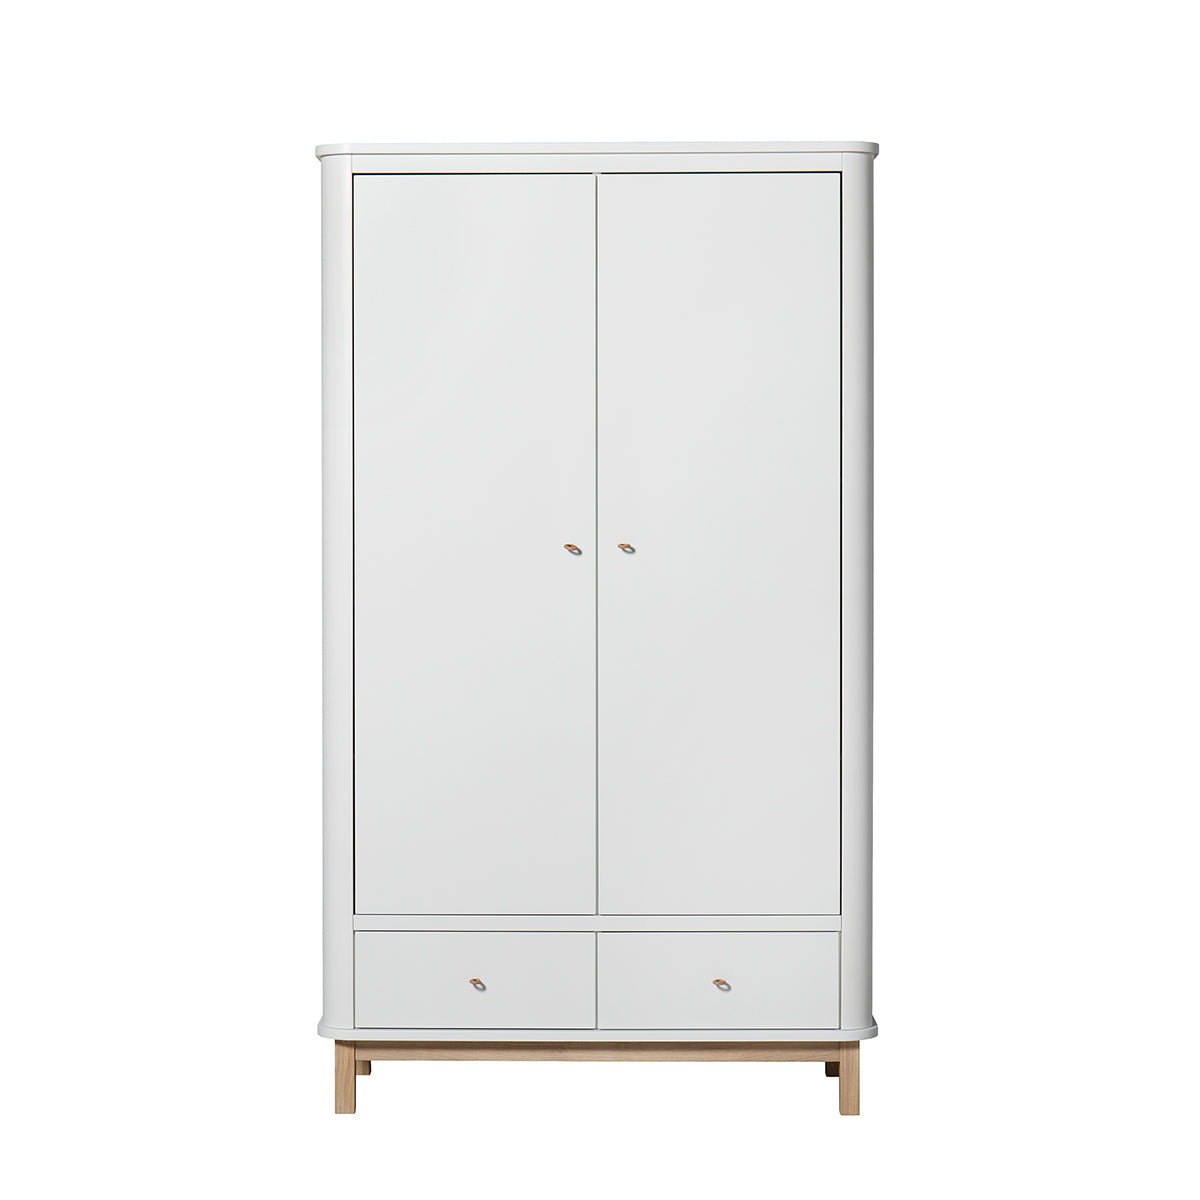 Oliver Furniture Wood Collection wardrobe, 2 doors, white/oak